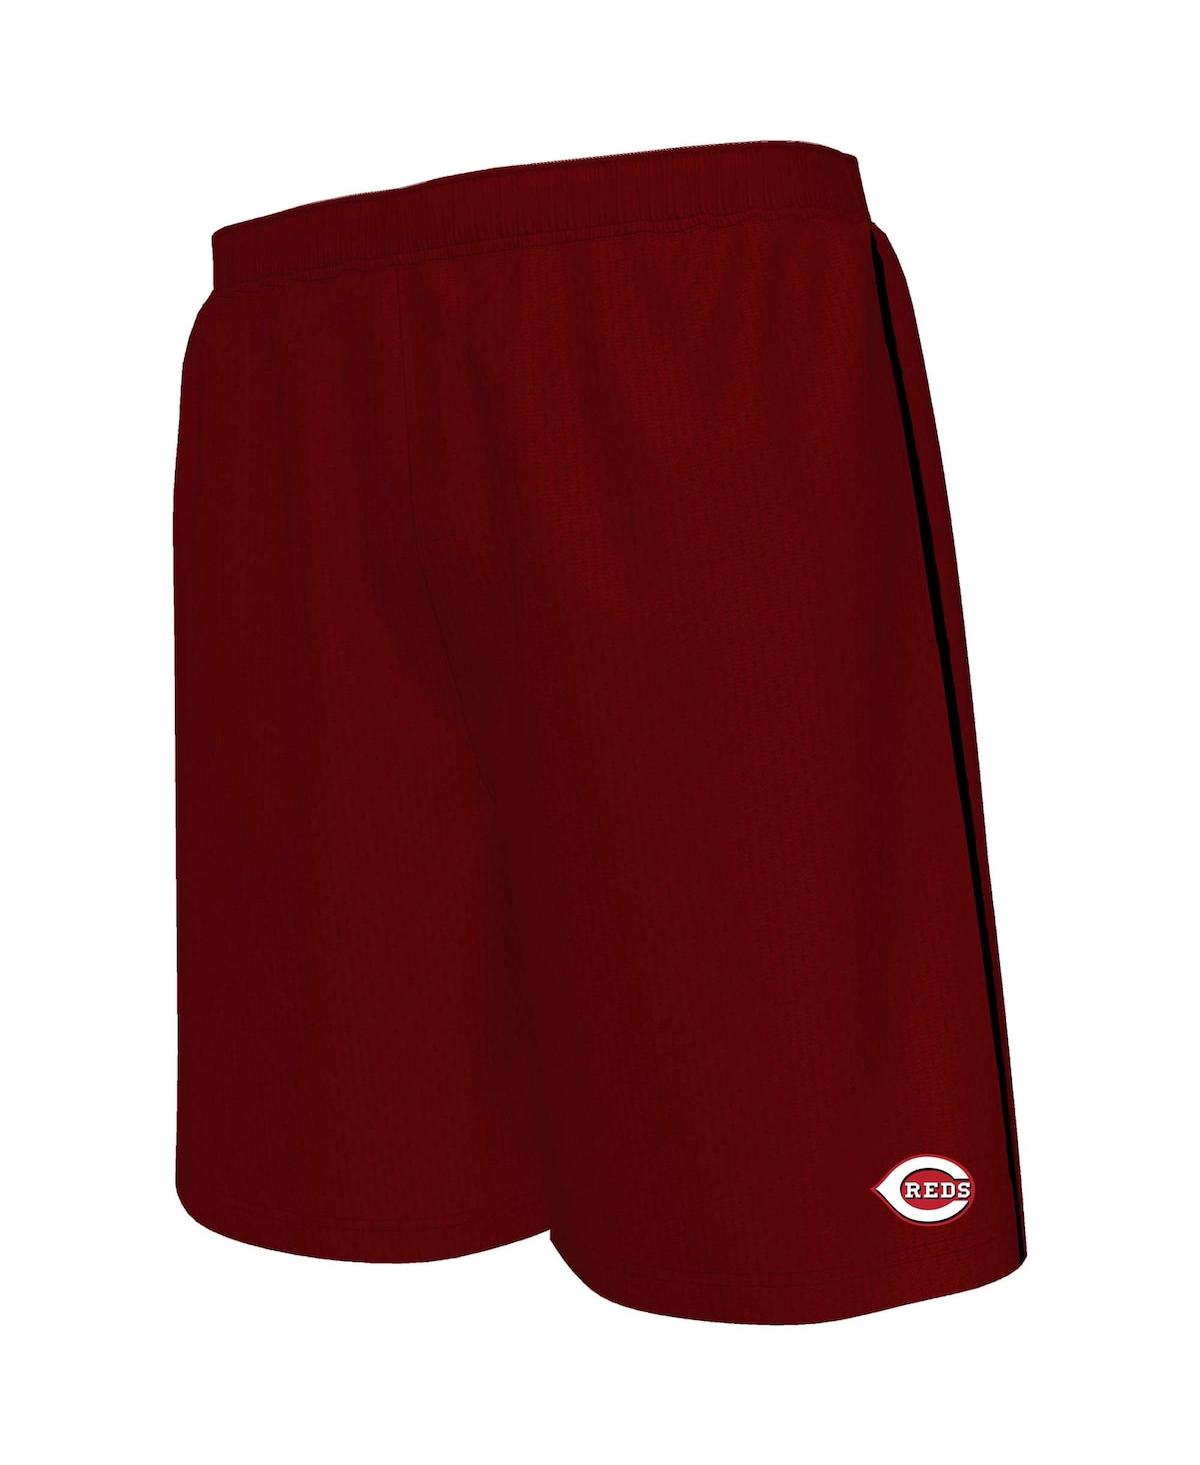 Men's Majestic Red Cincinnati Reds Big Tall Mesh Shorts - Red